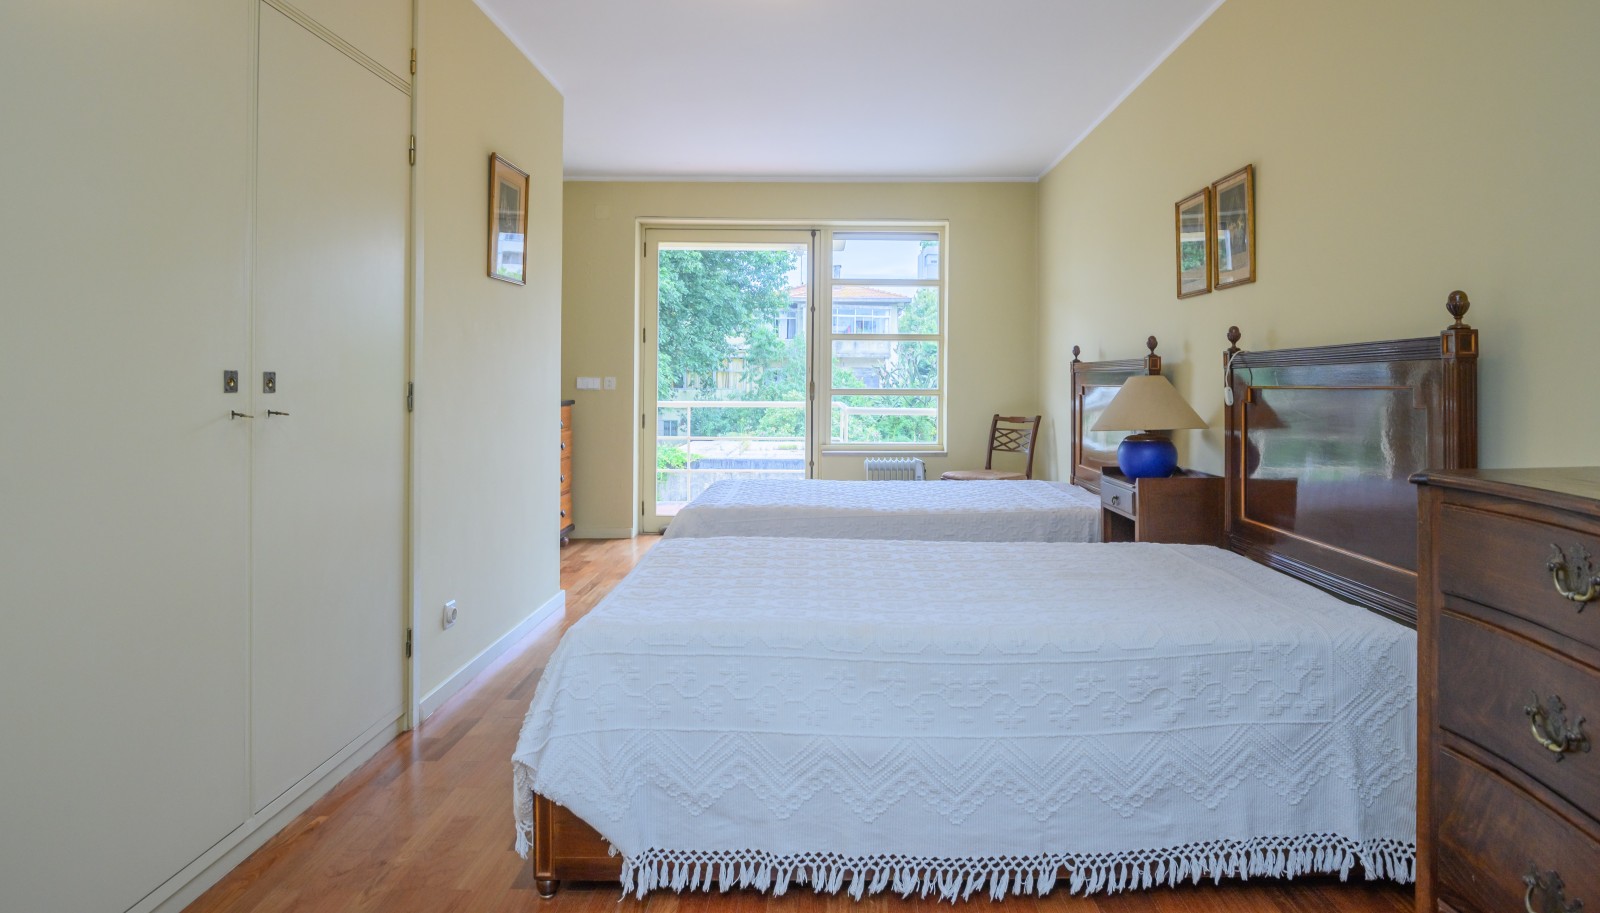 4+1 Dormitorio Villa, en venta, Pinheiro Manso, Porto, Portugal_229578